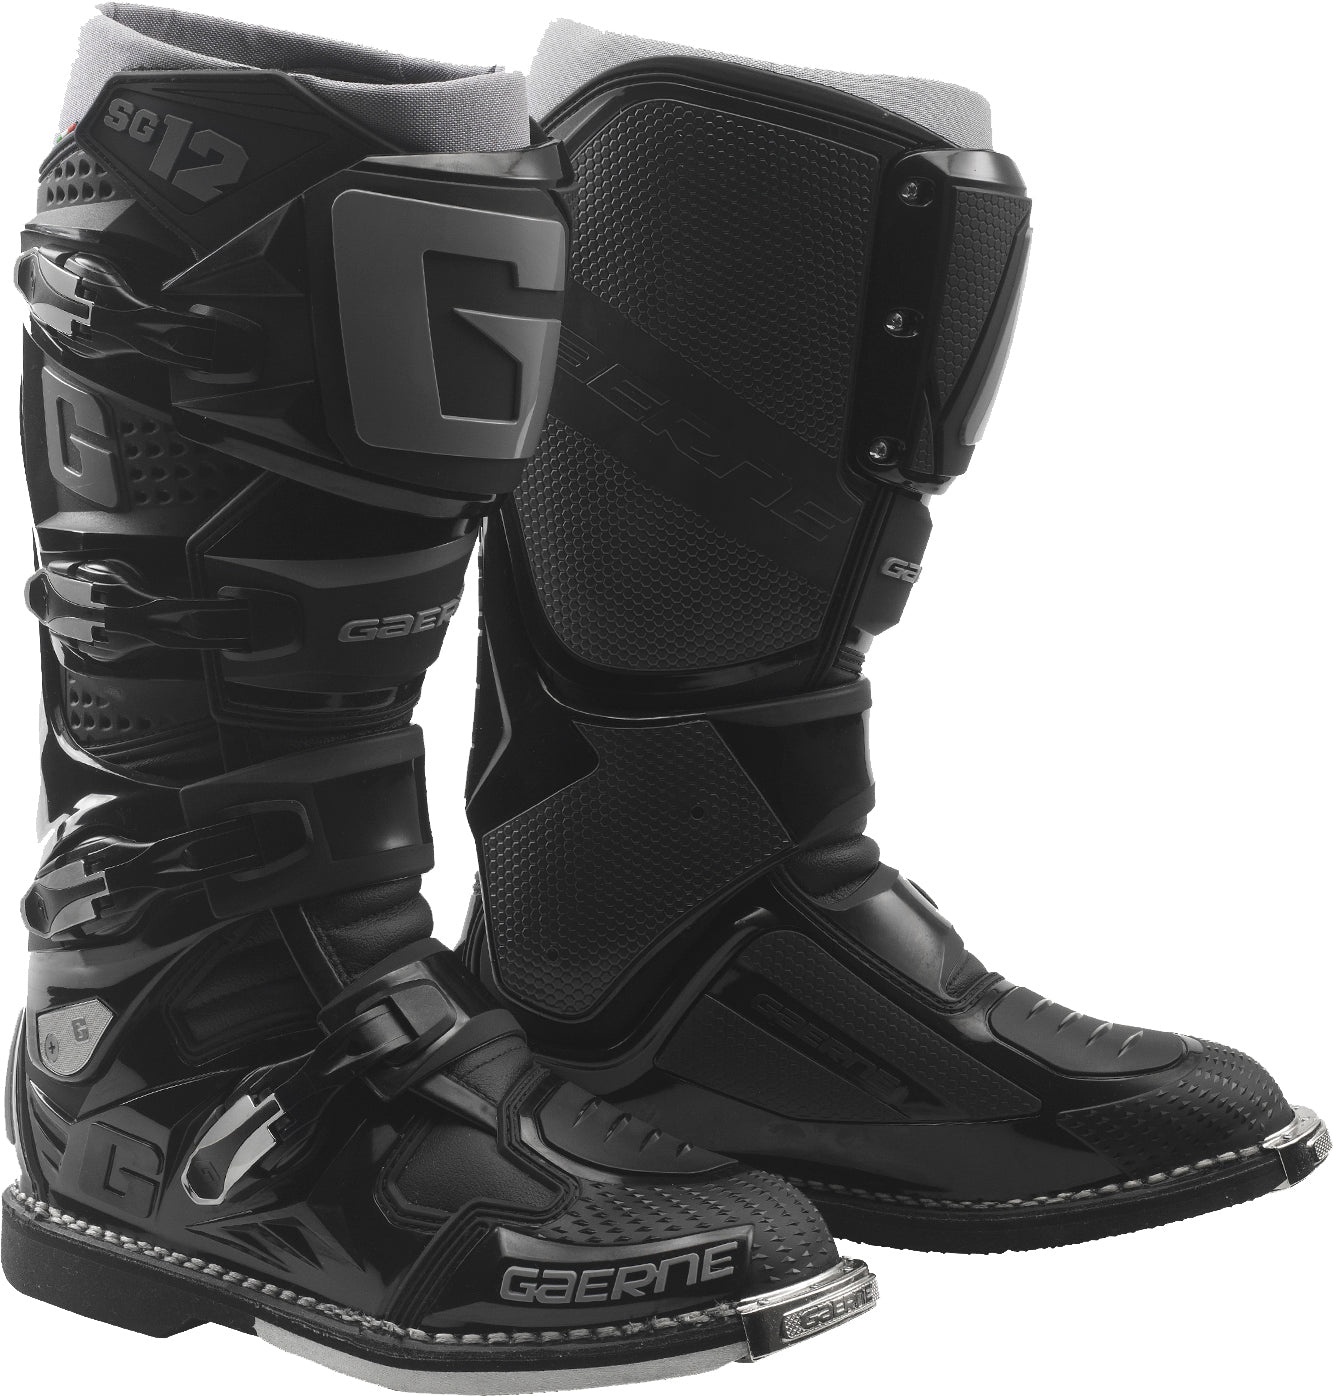 Sg 12 Boots Black Sz 10